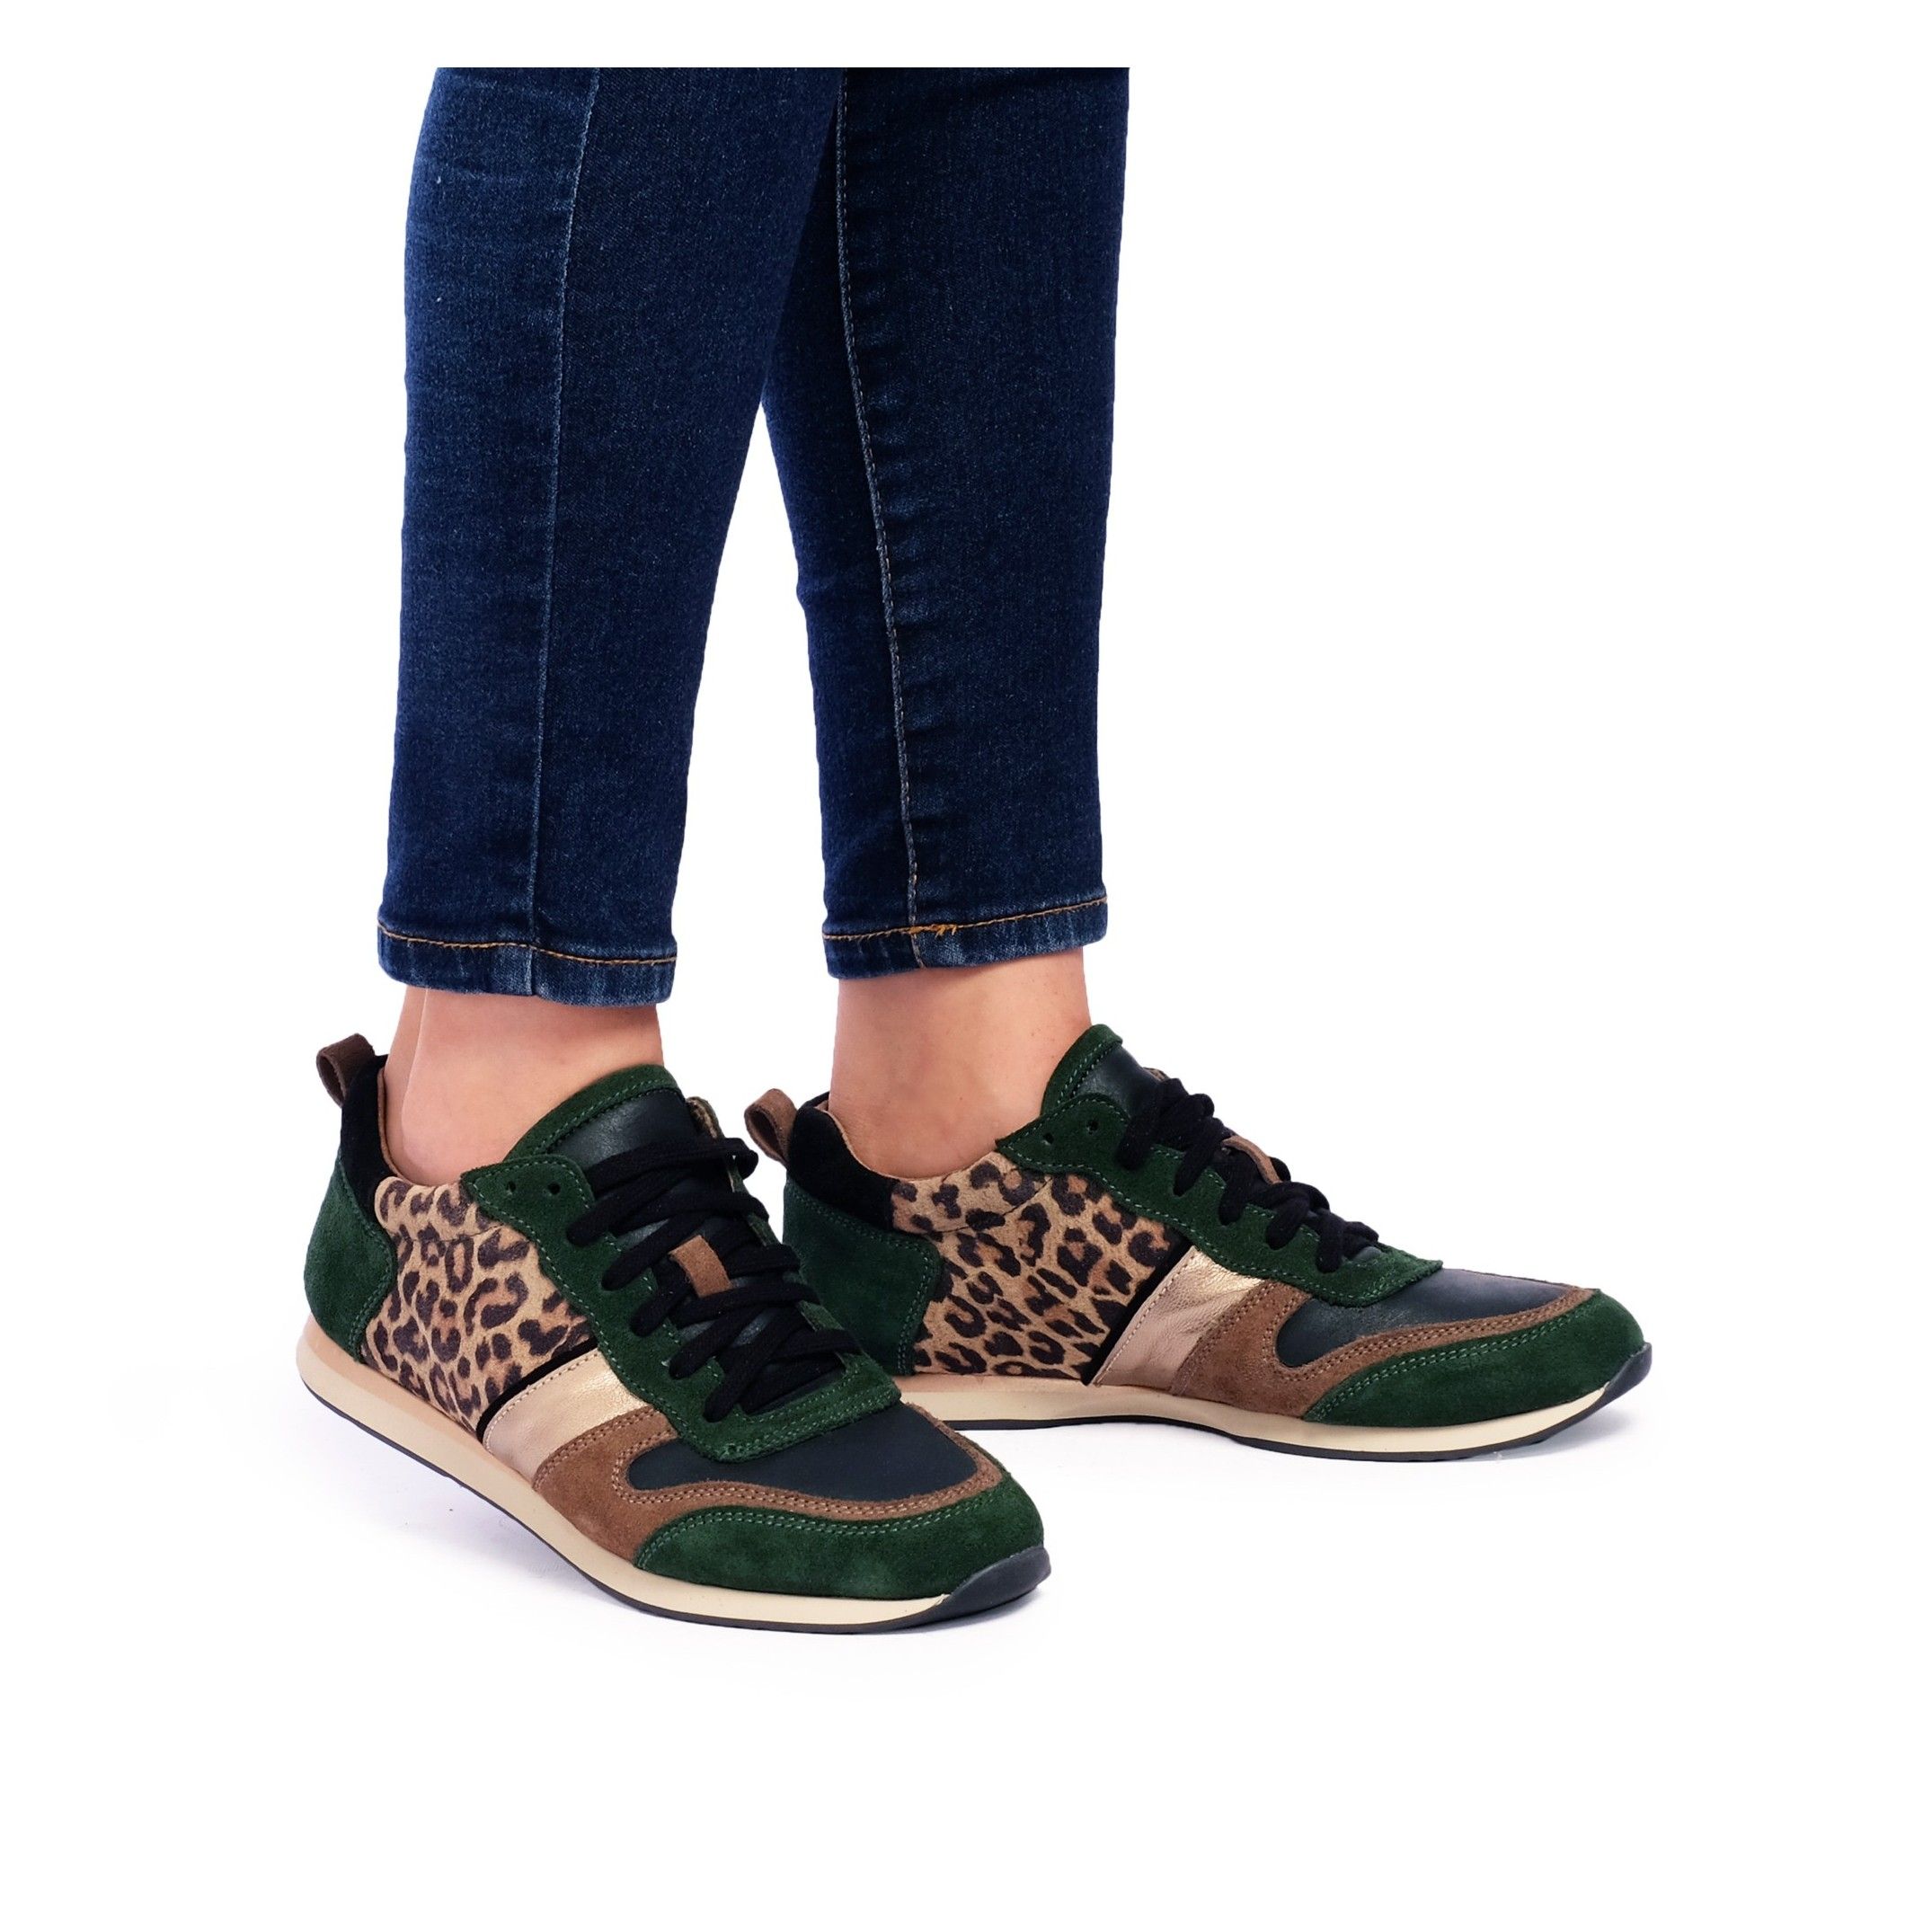 Eva López Leather Sneaker Women Laces Green Shoes